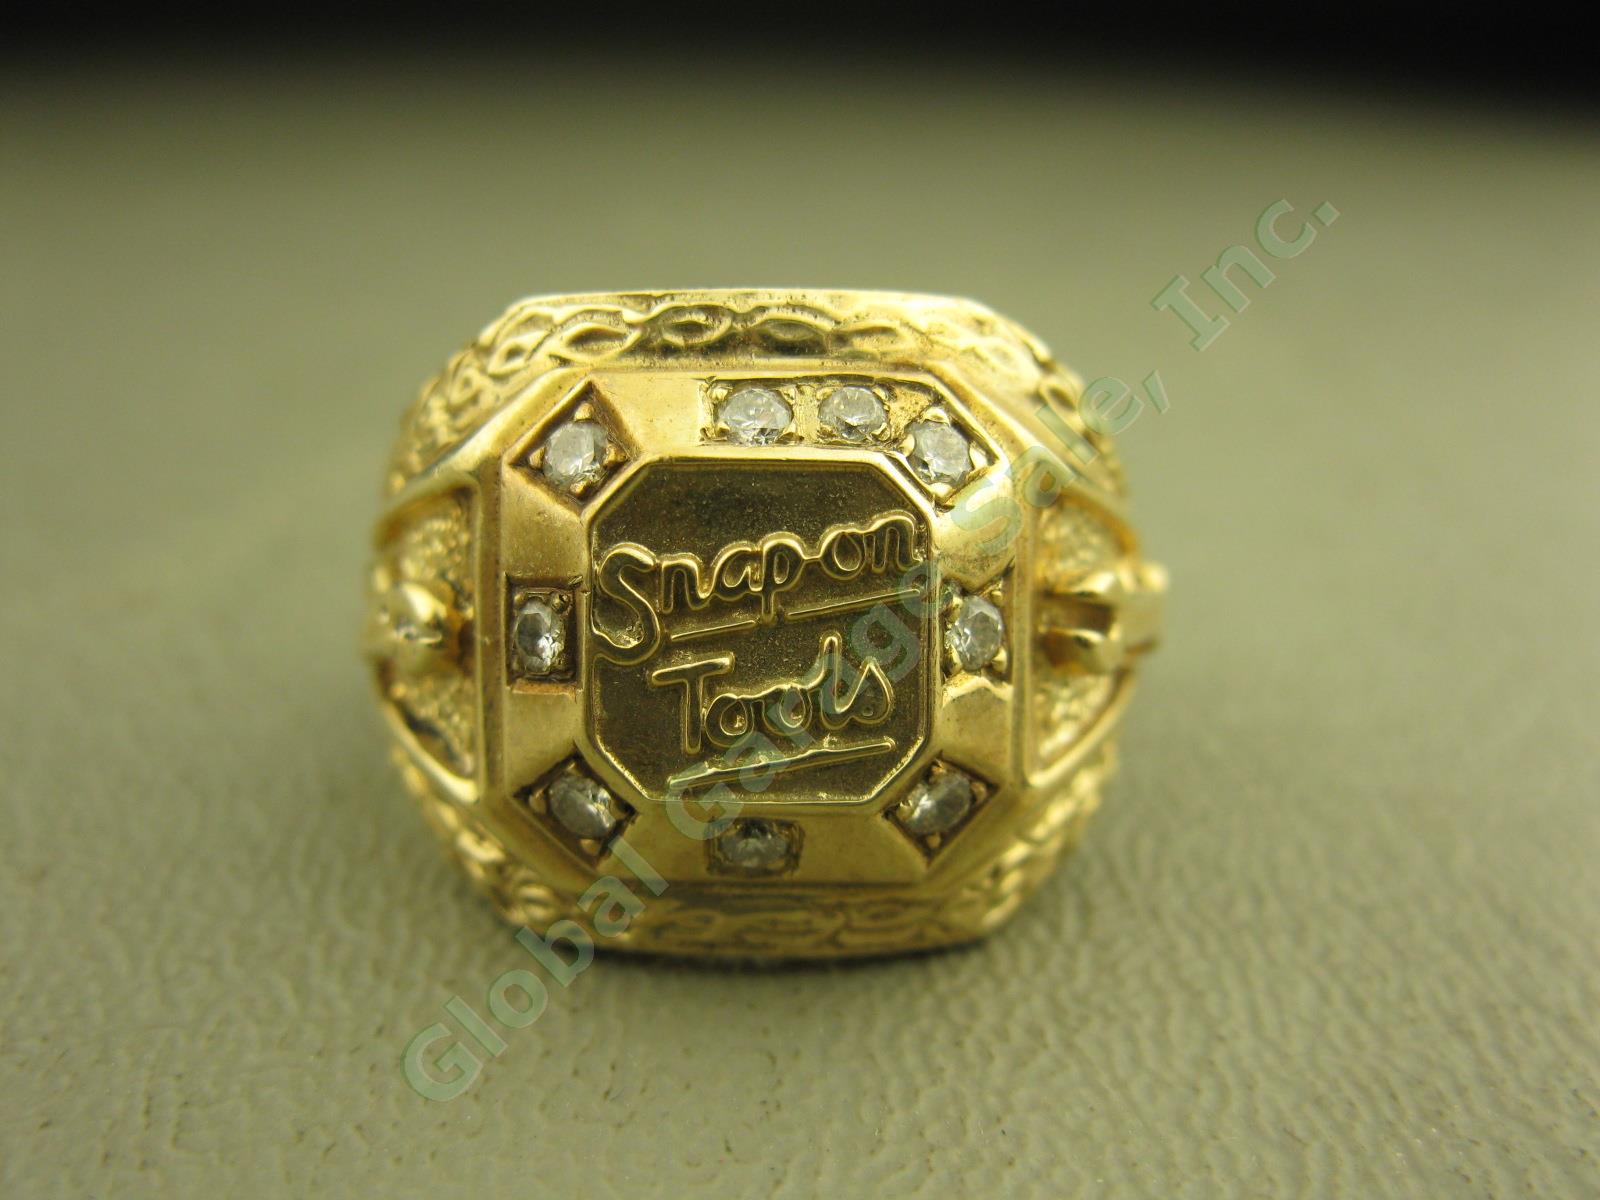 Snap-On Tools Dealer Sales Award 10K Gold Ring W/9 Diamonds 13.8 Gram Size 10.75